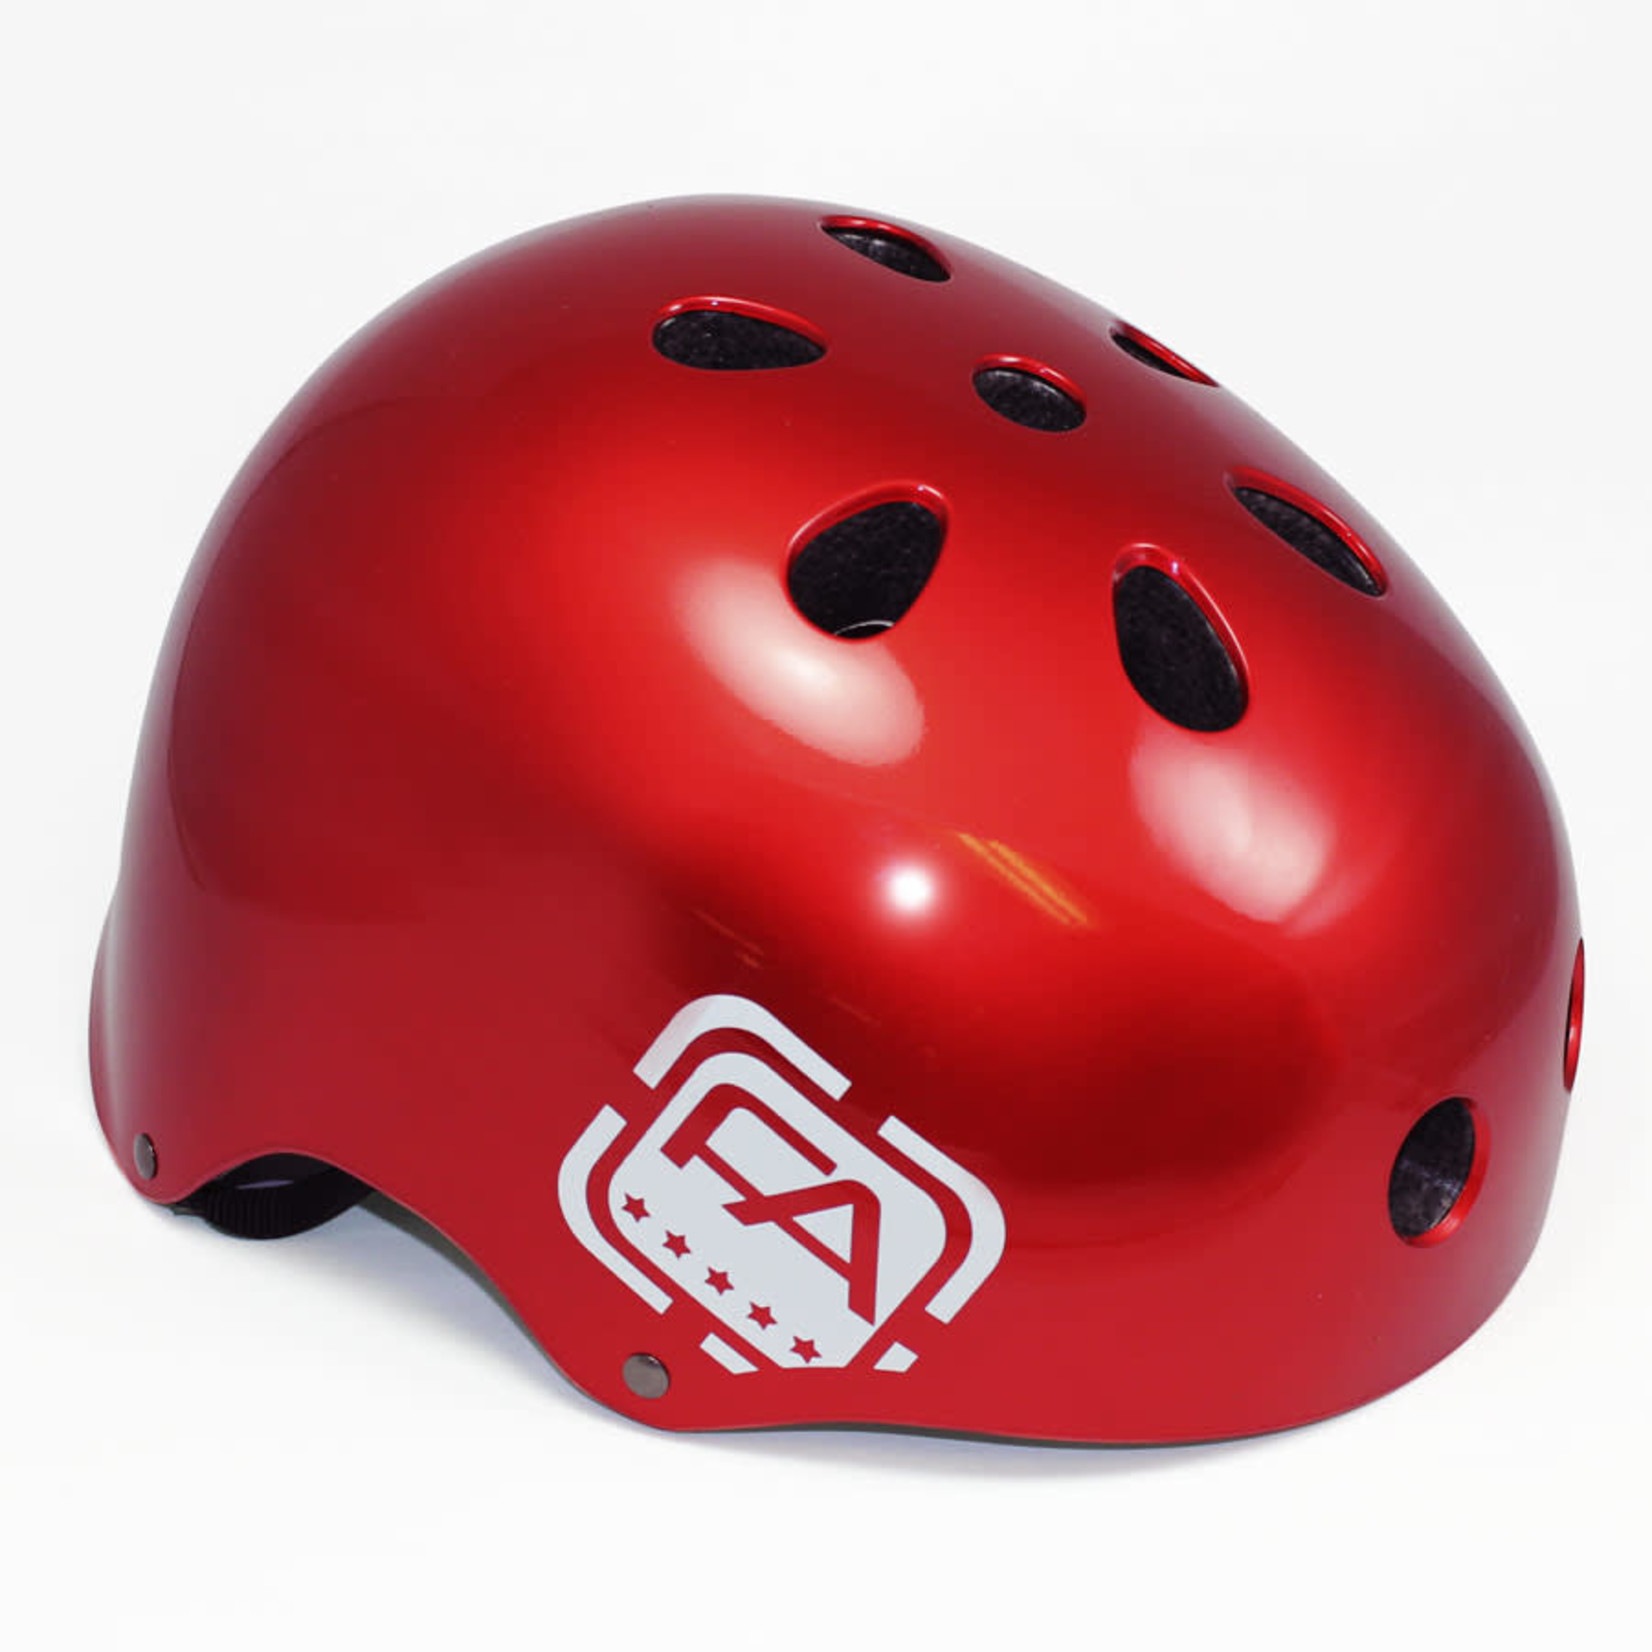 FREE AGENT Free Agent Street Helmet